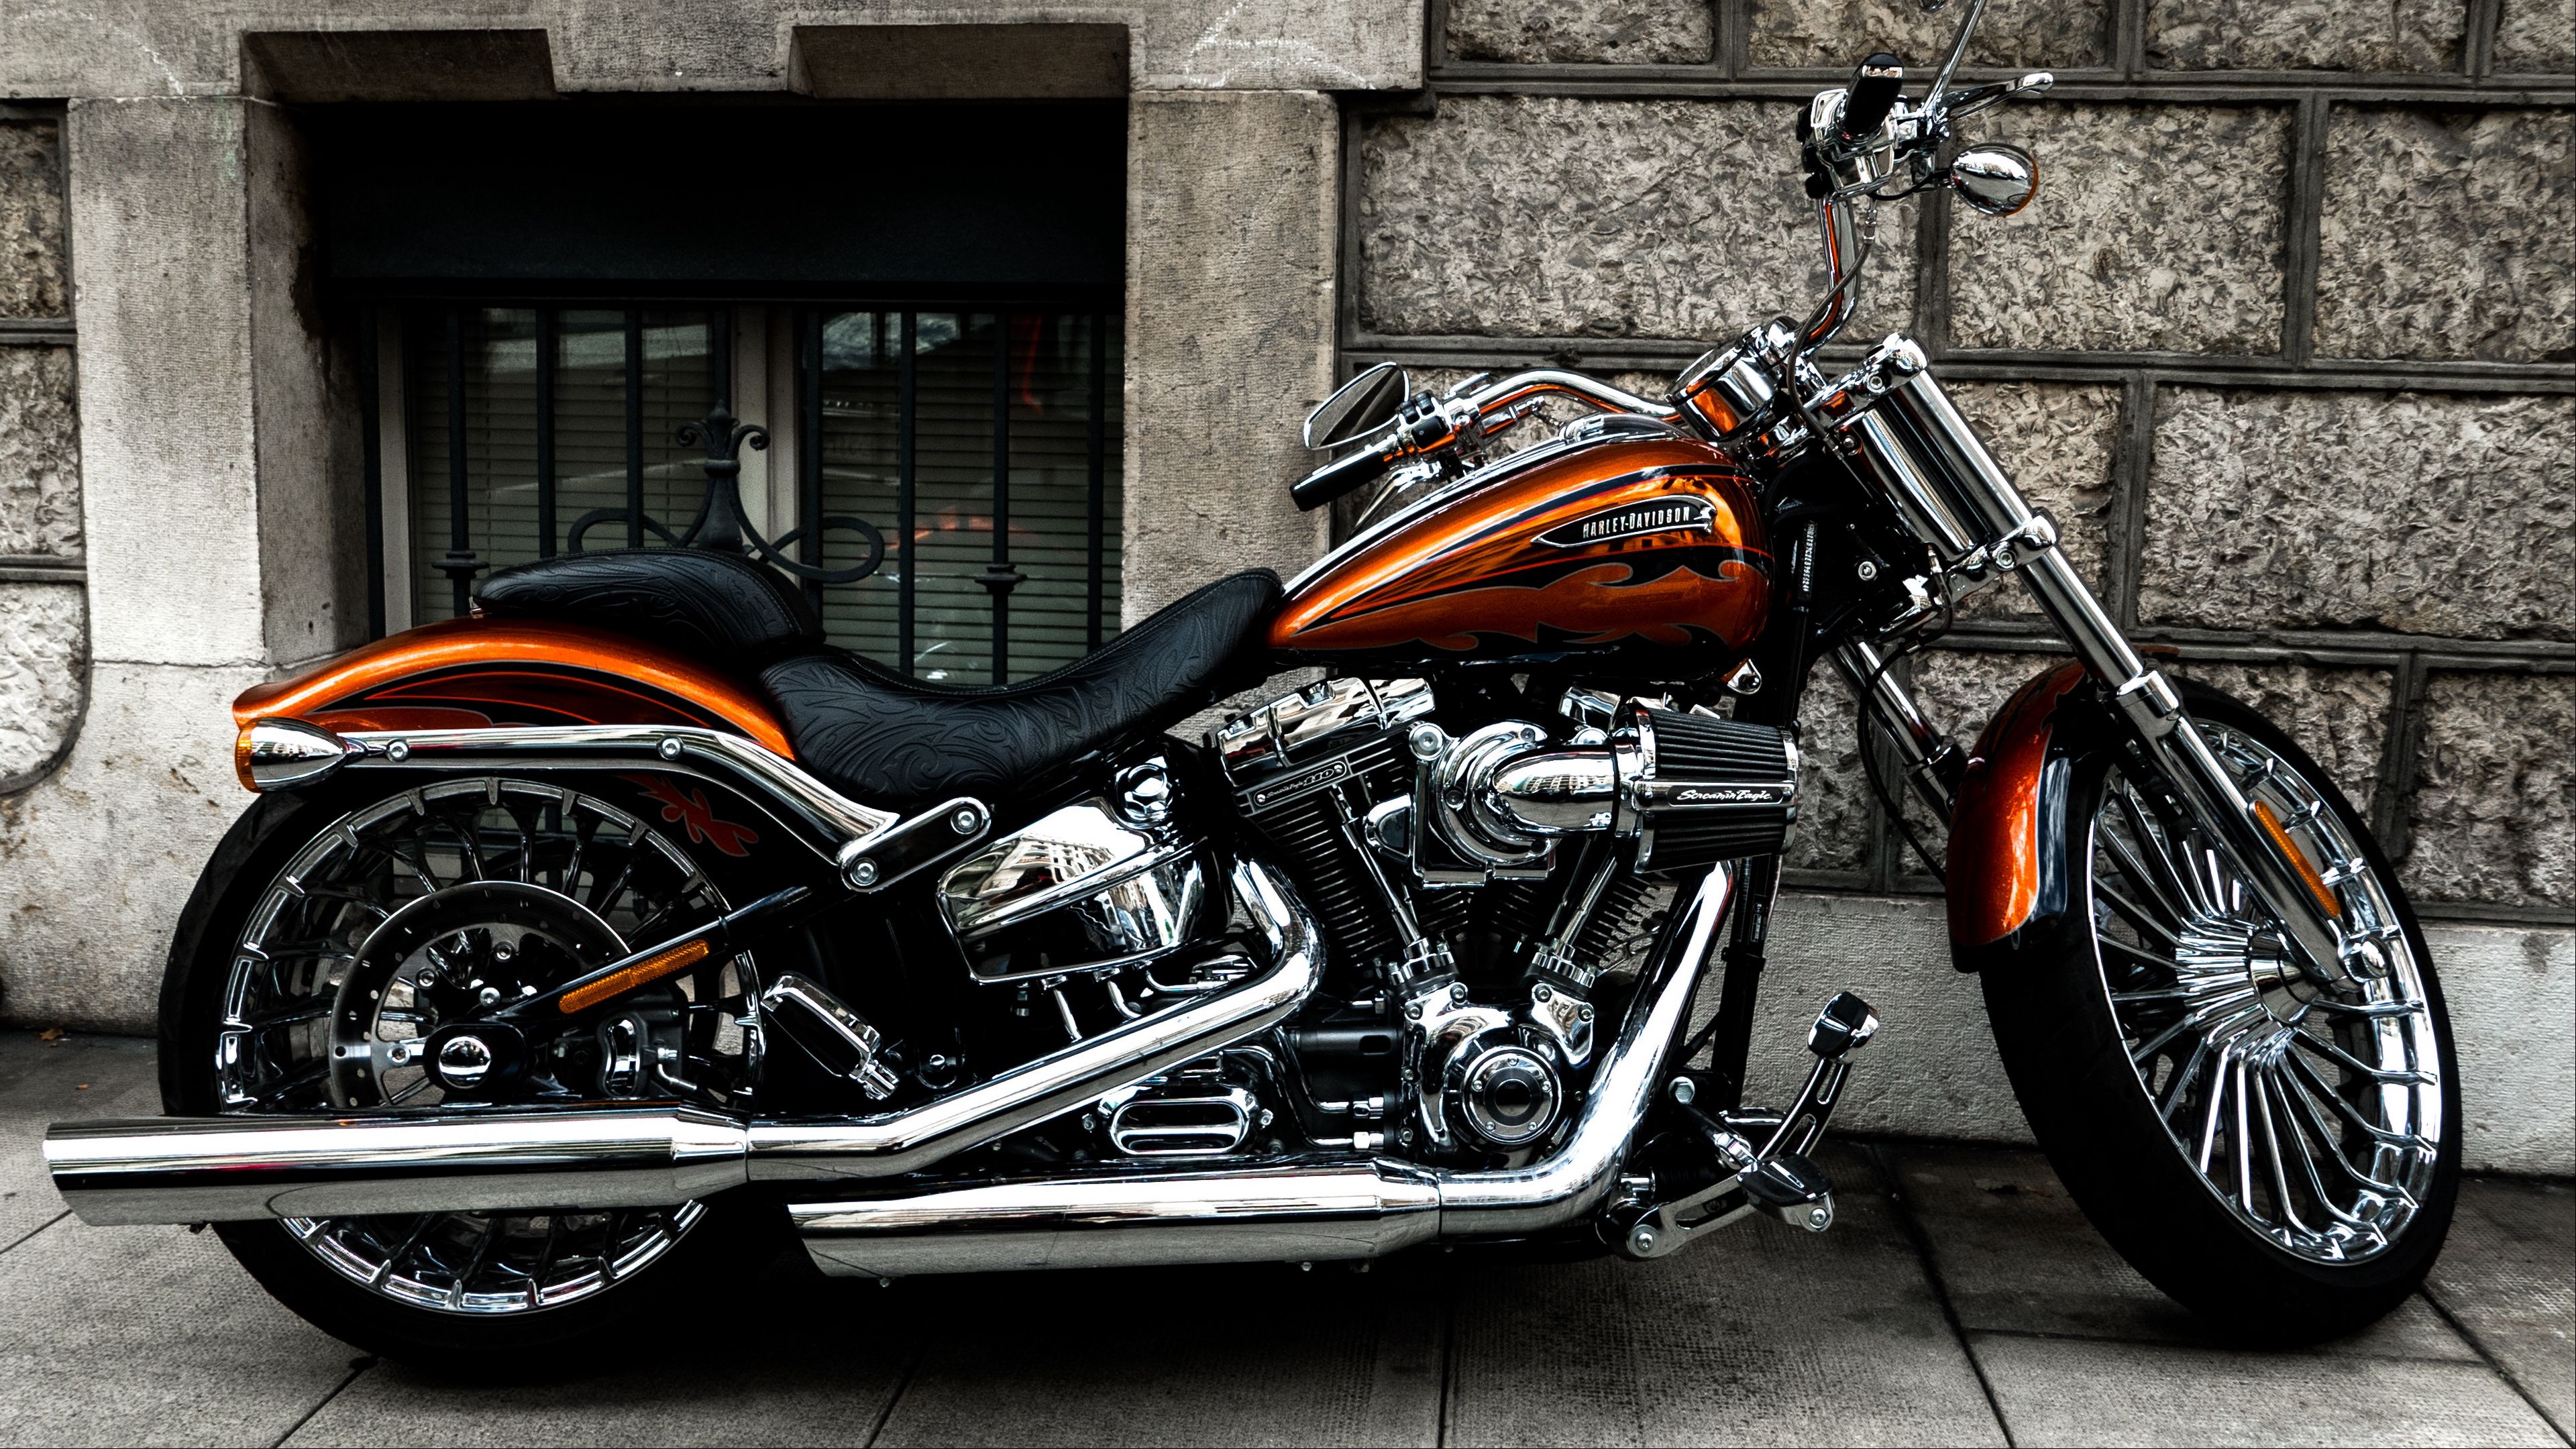 3840x2160 Wallpaper motorcycle, bike, side view, wheel